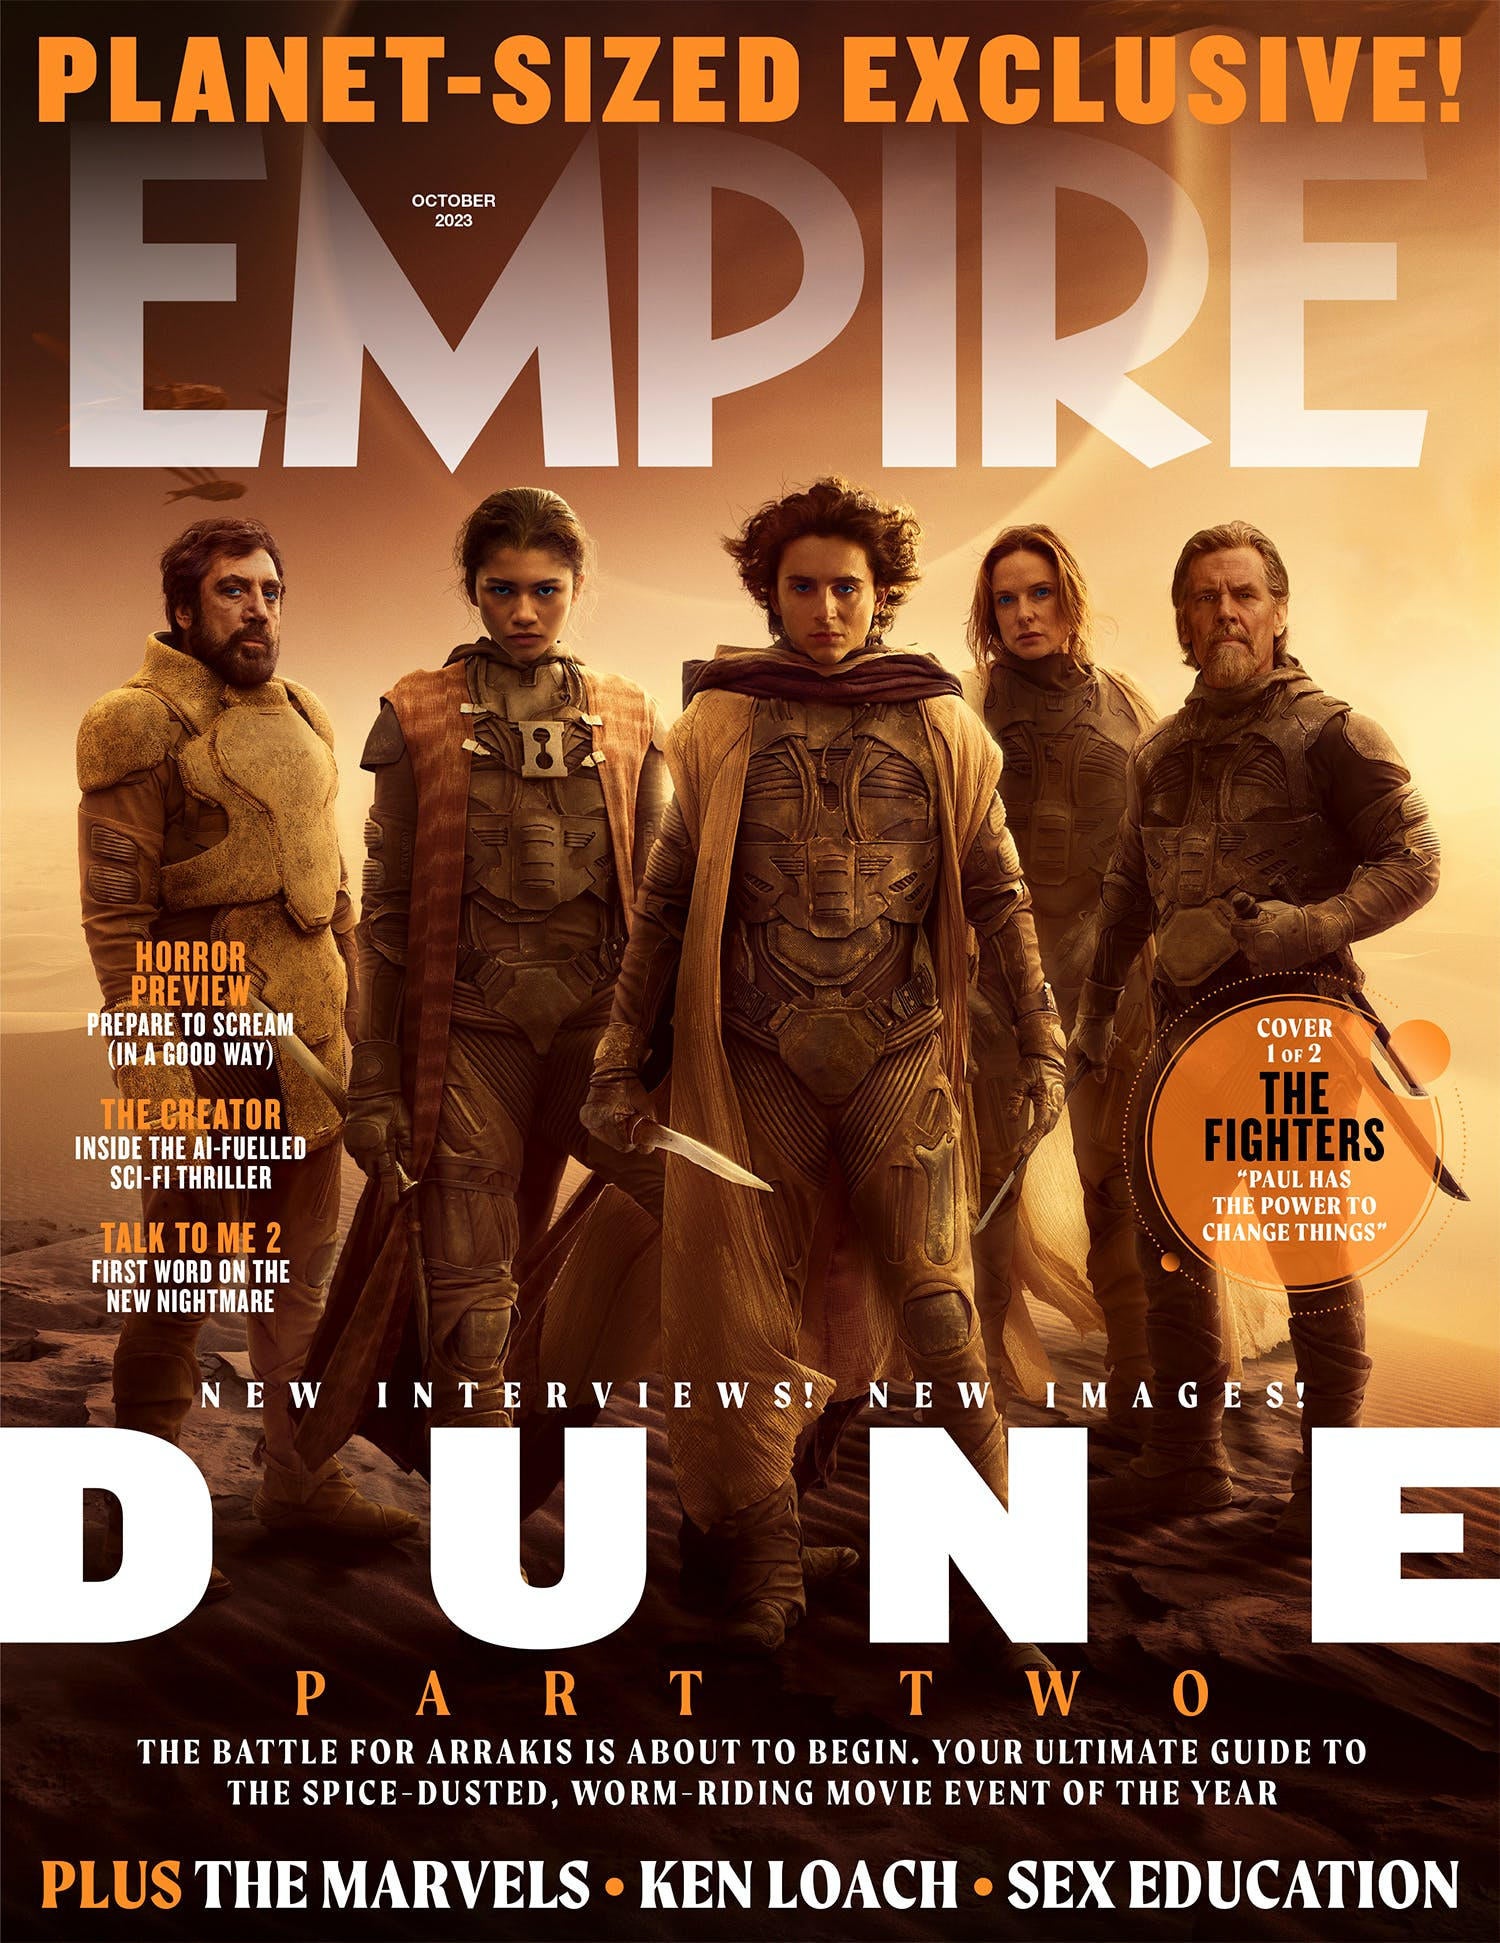 duna-parte-dois-empire-magazine-cover-fighters.jpg